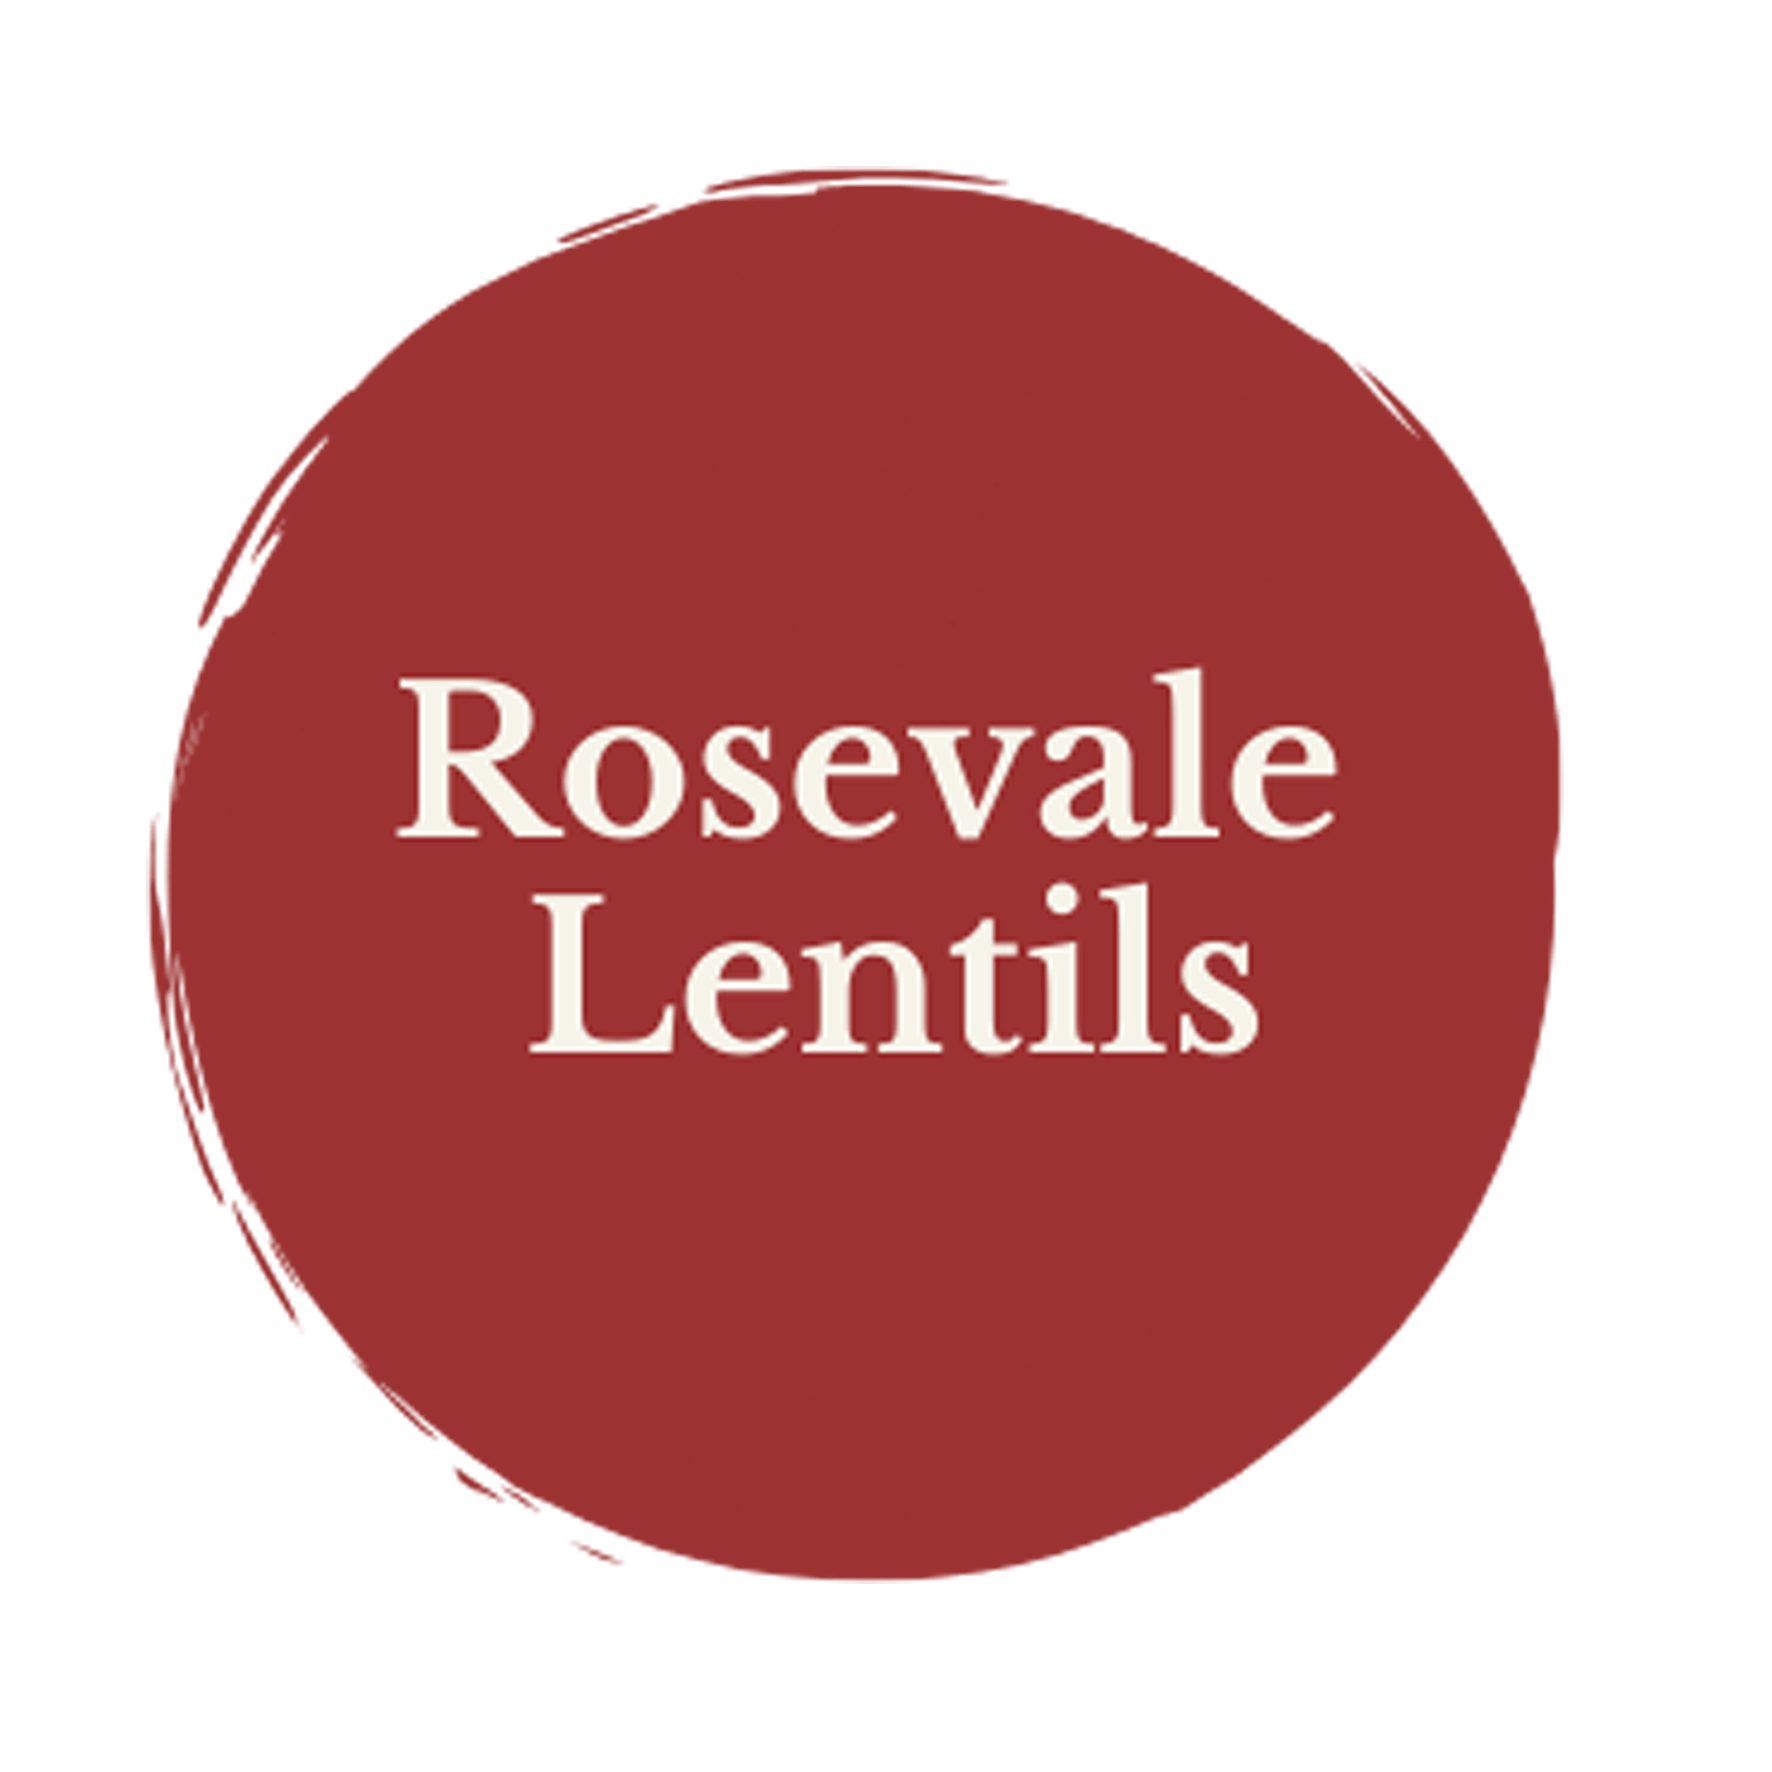 Rosevale Lentils